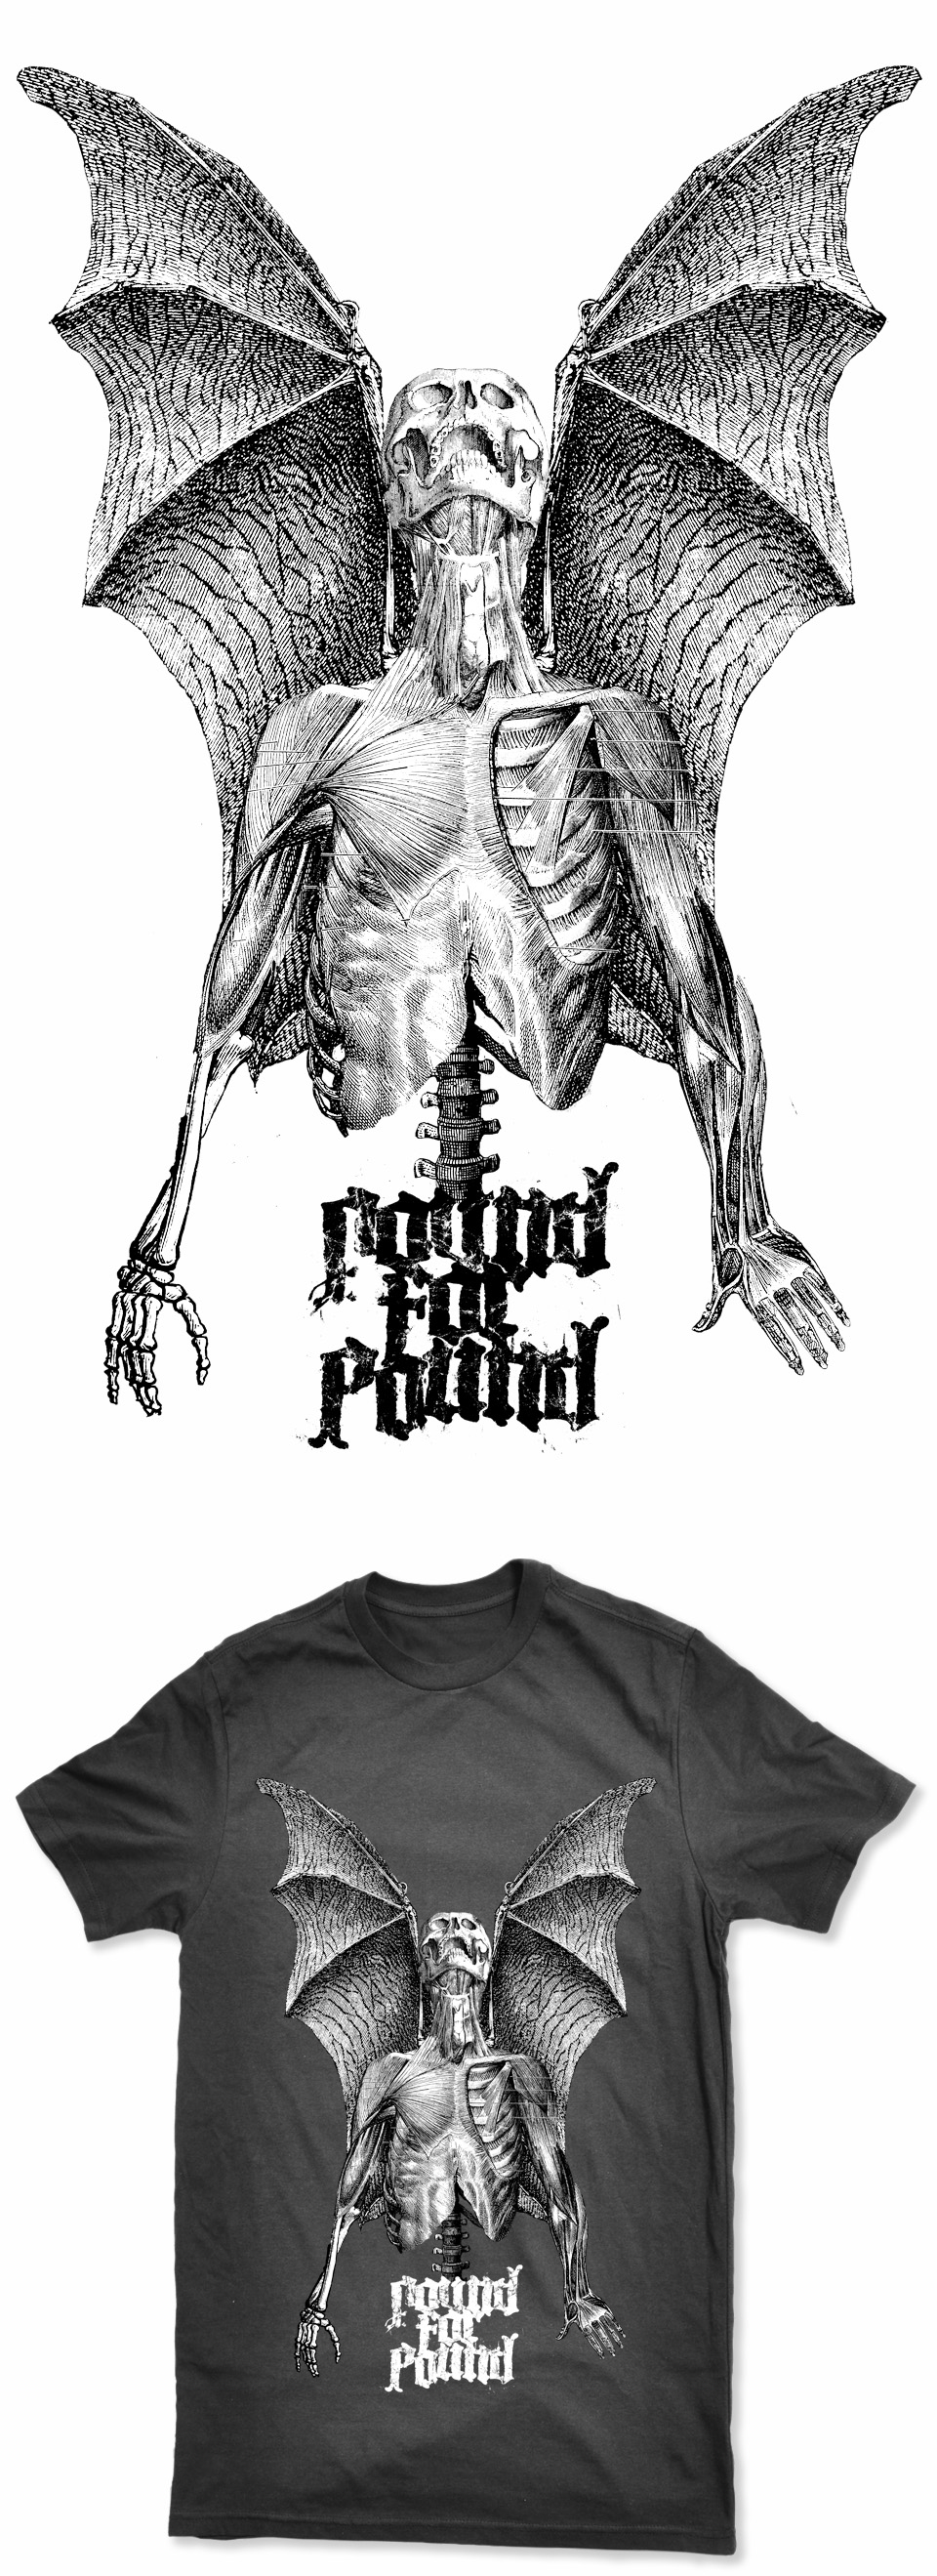 Pound For Pound Shirt Design